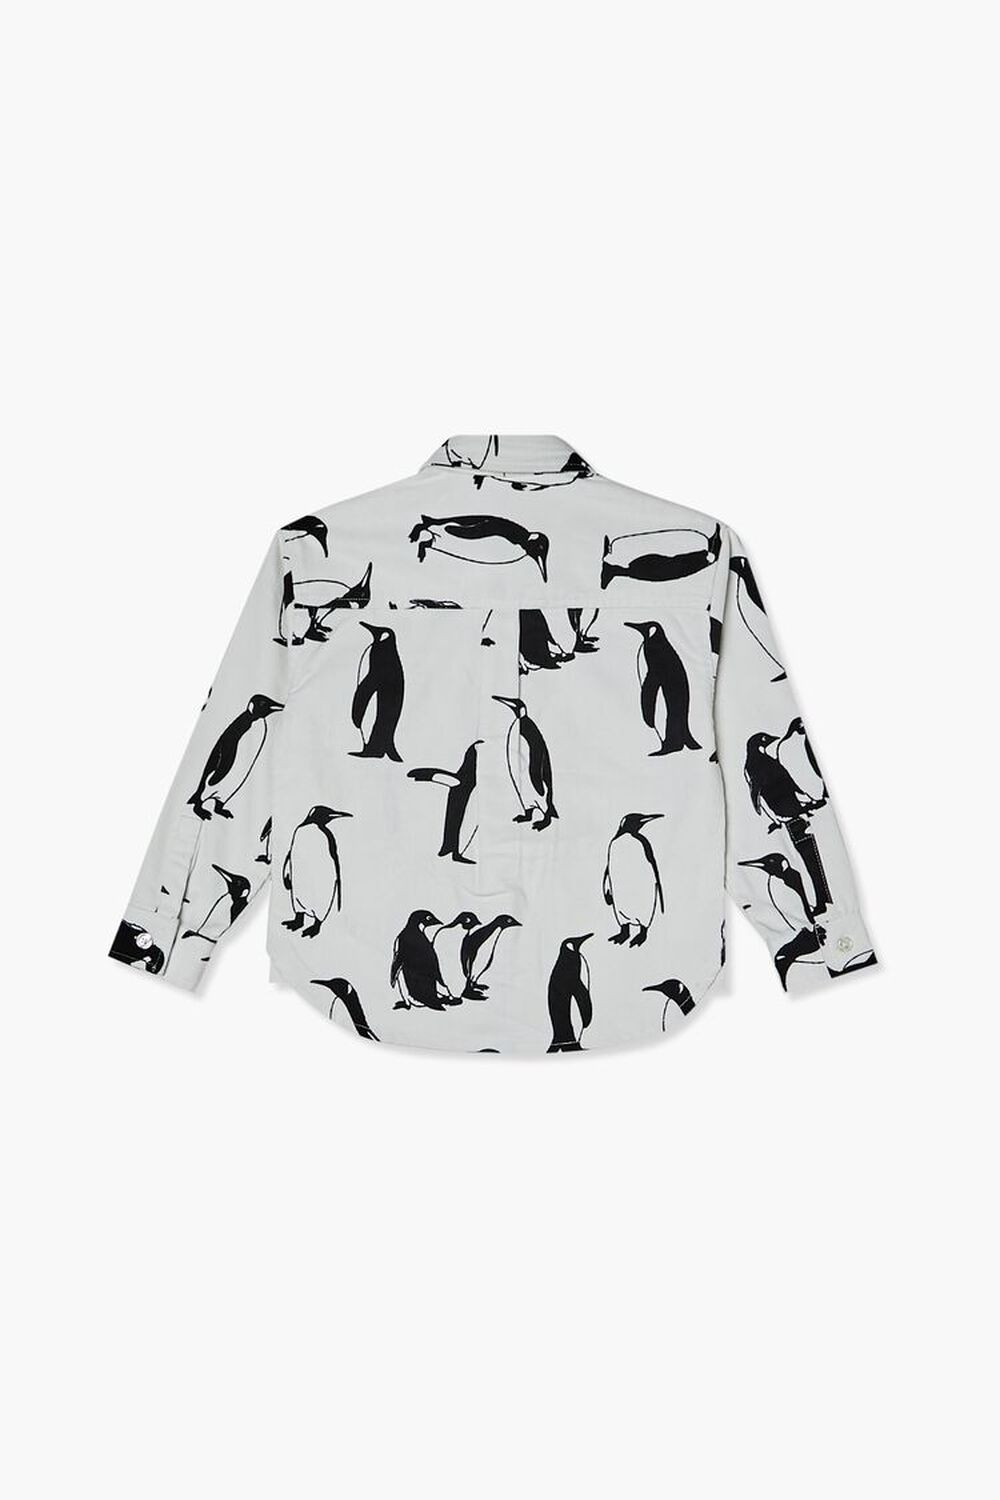 CREAM/BLACK Kids Penguin Print Shirt (Girls + Boys), image 2